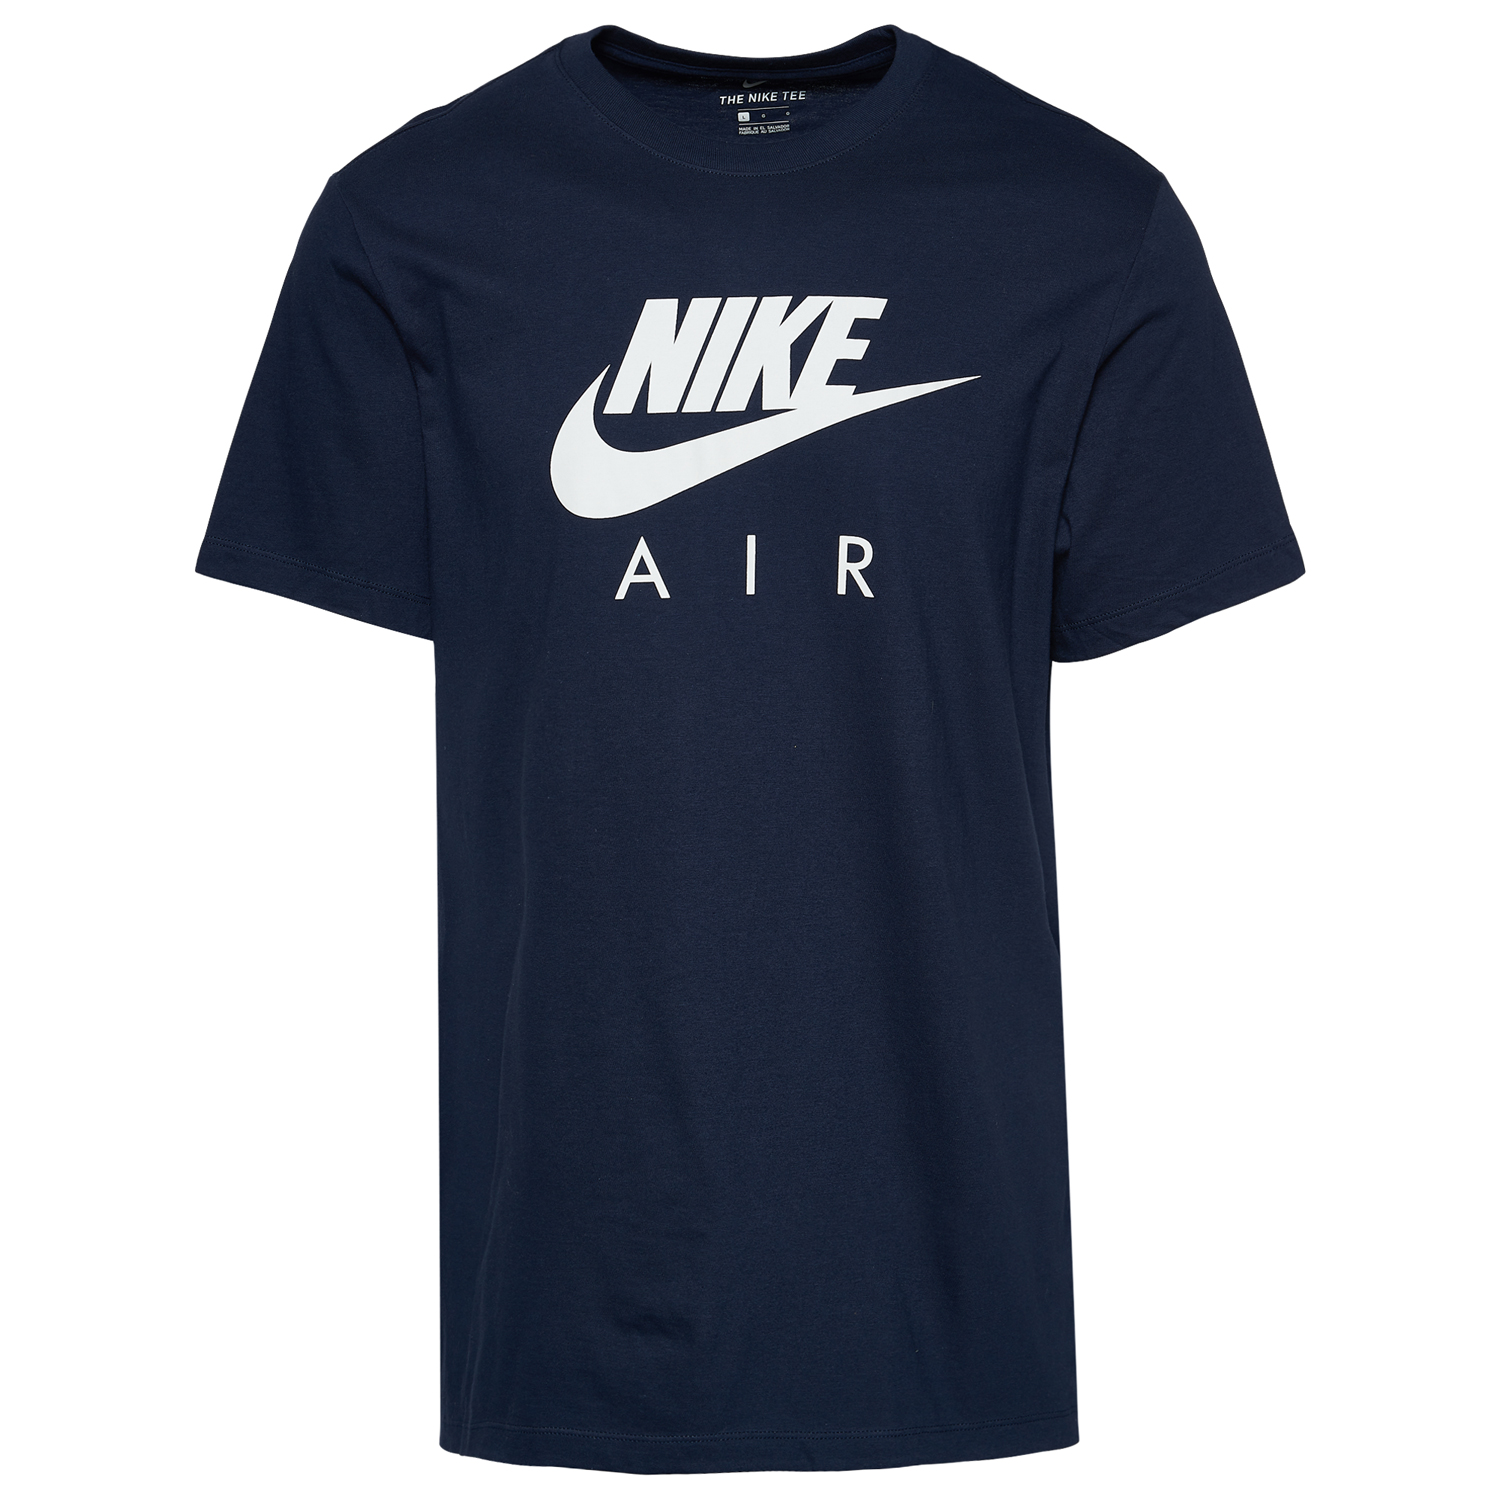 nike-air-t-shirt-midnight-navy